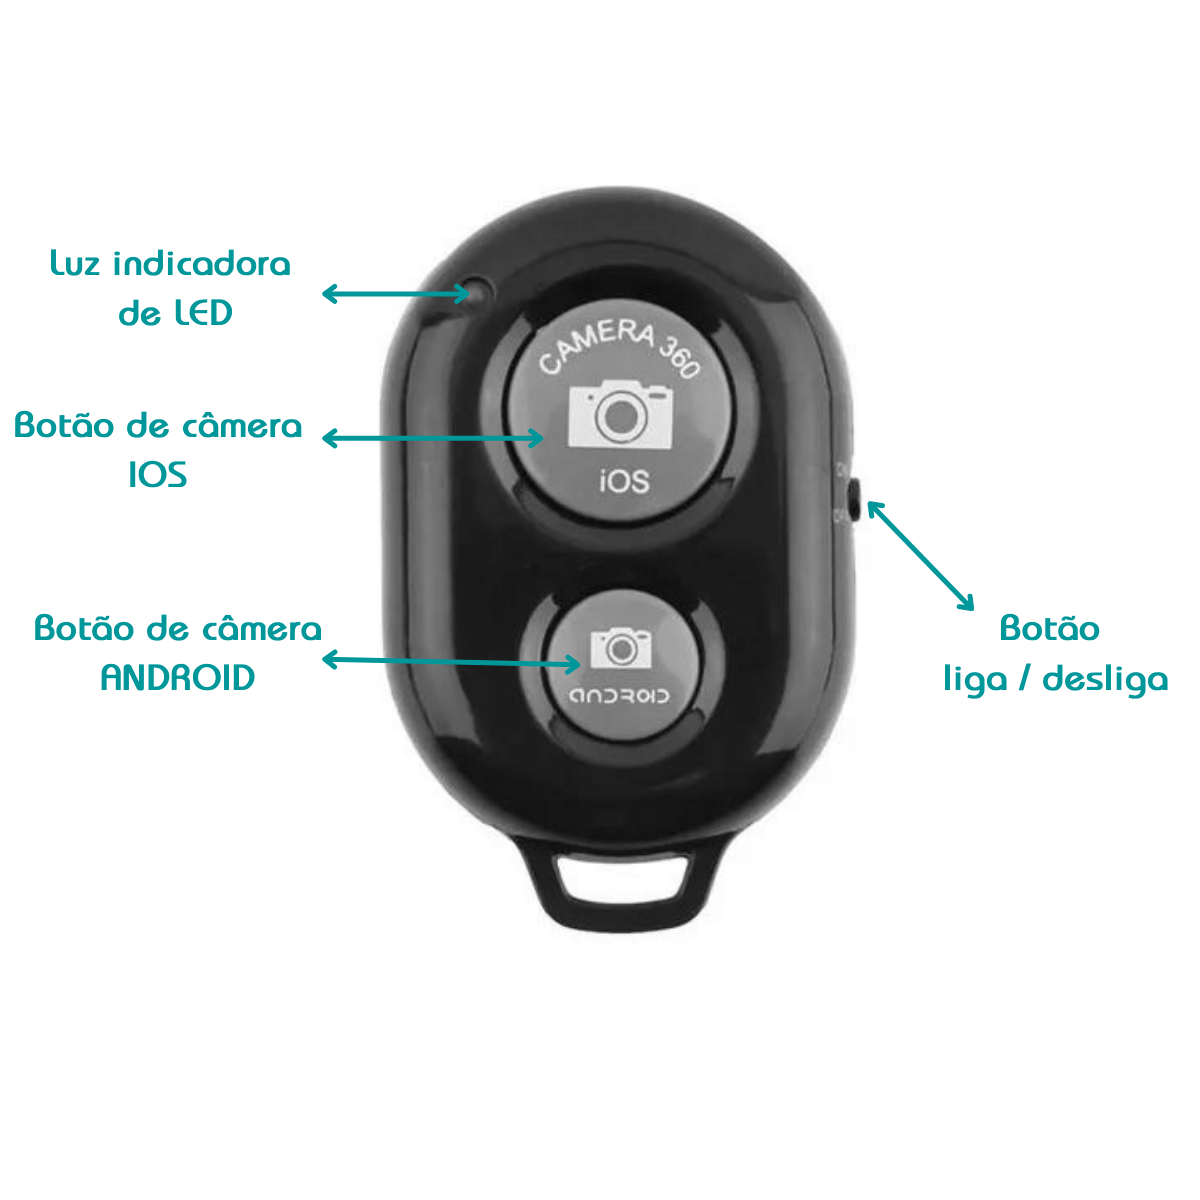 Mini controle remoto Bluetooth para celular Android ou iPhone - Controle de pau de selfie - Sem Bateria